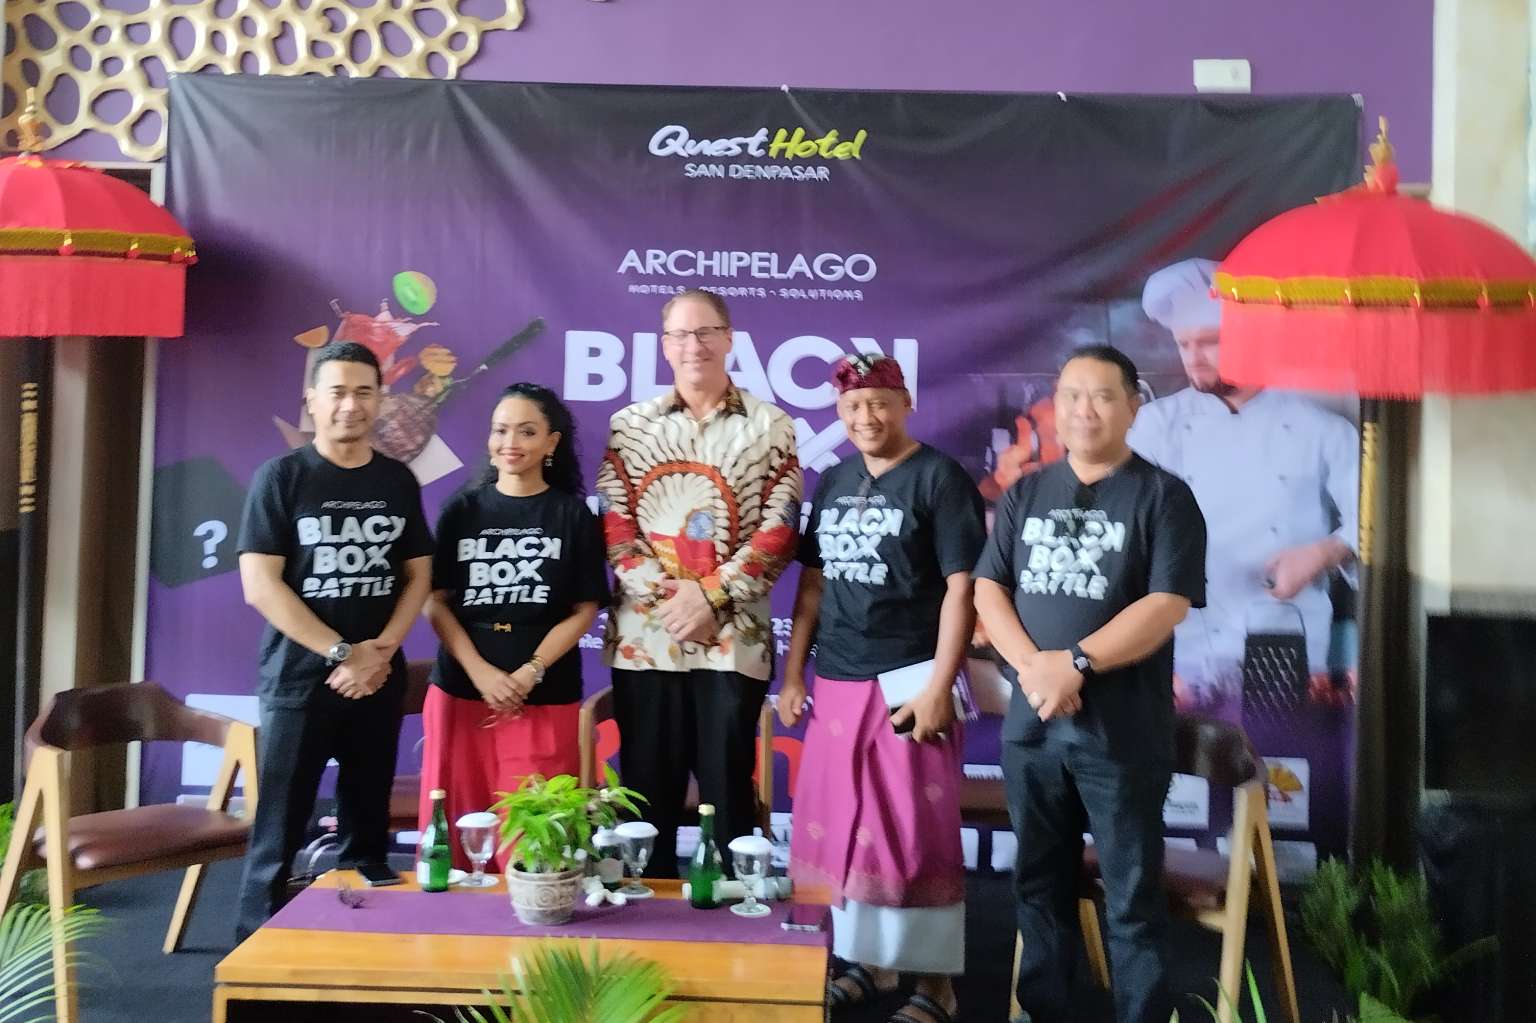 Archipelago International Gelar Black Box Battle ke 5, Dorong Pengembangan Industri F&B di Indonesia